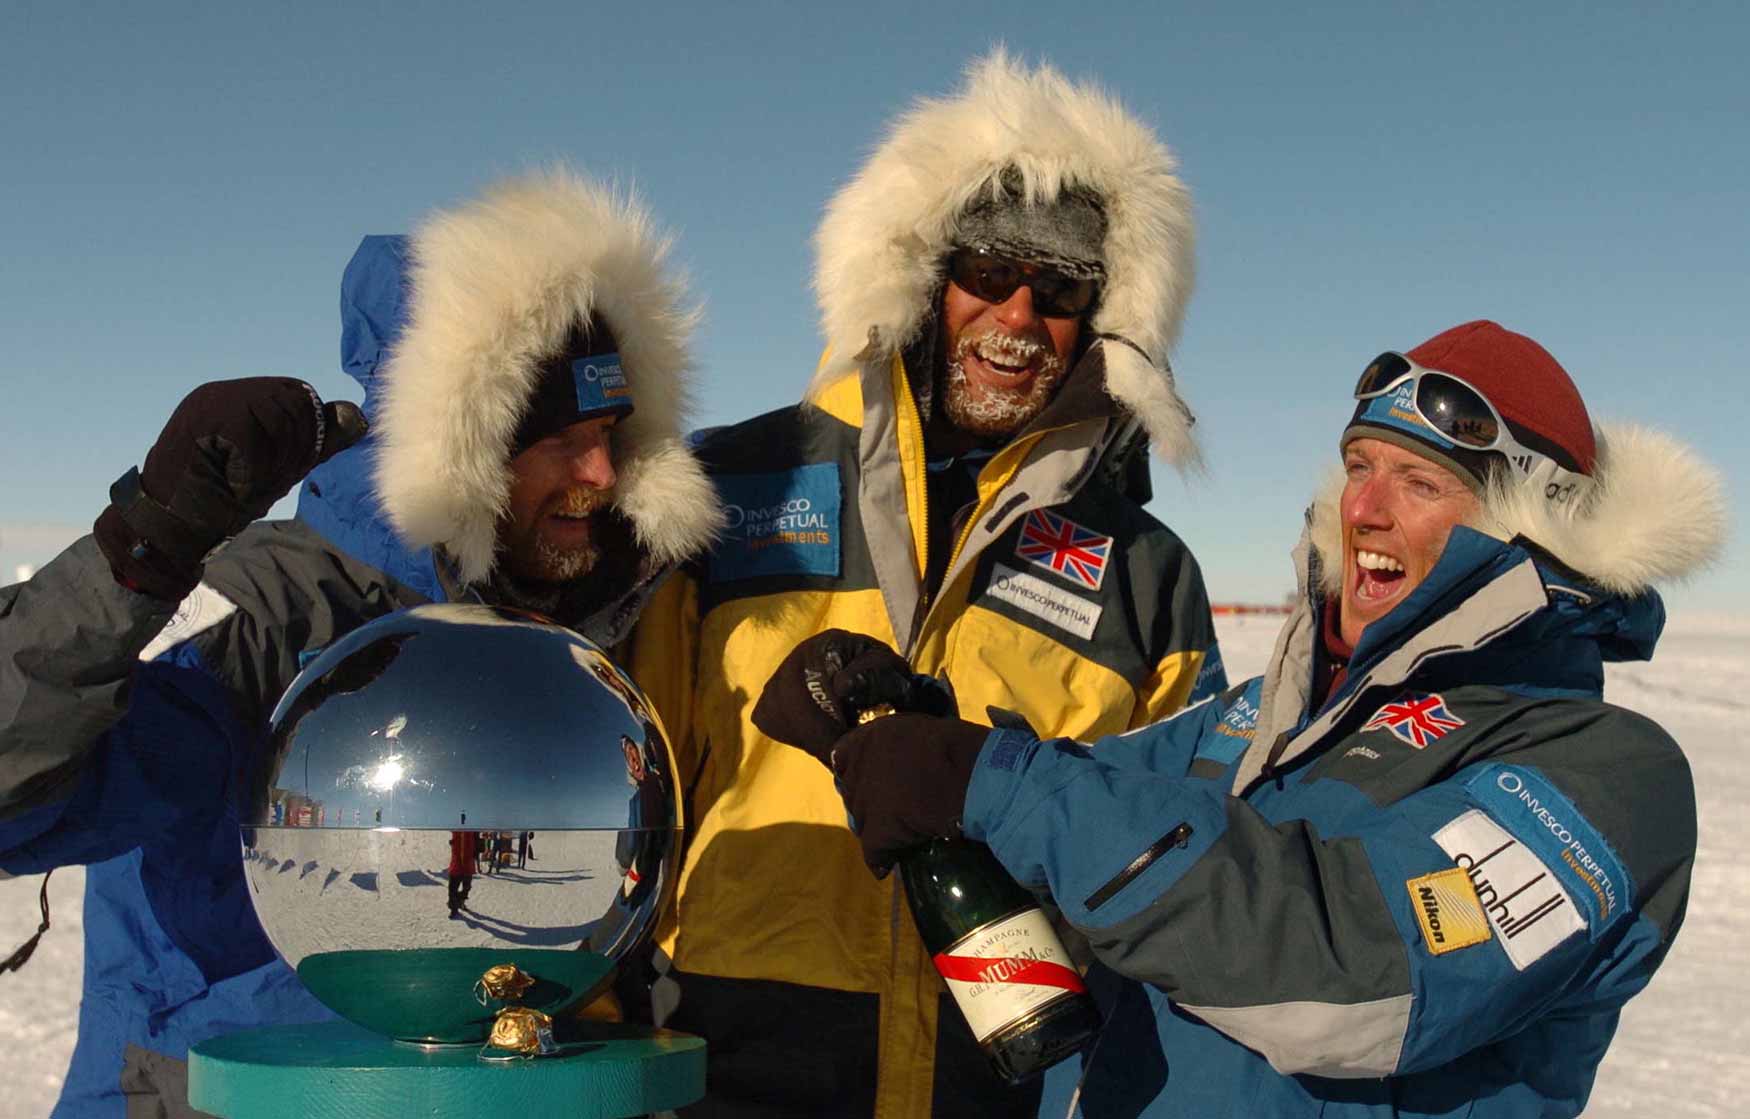 The South Pole Celebrations